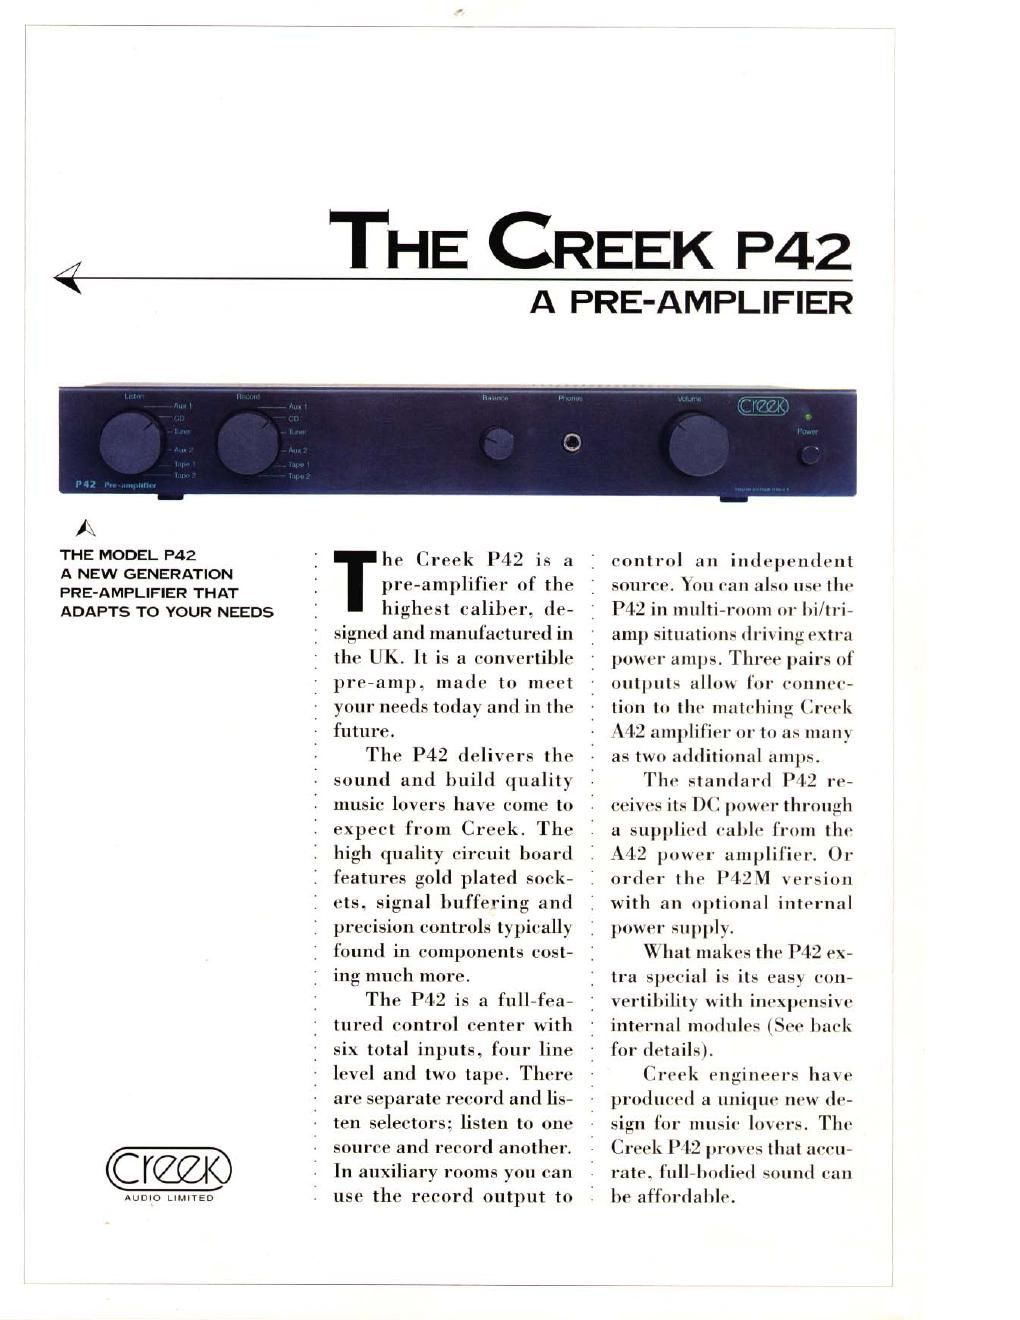 creek p 42 brochure